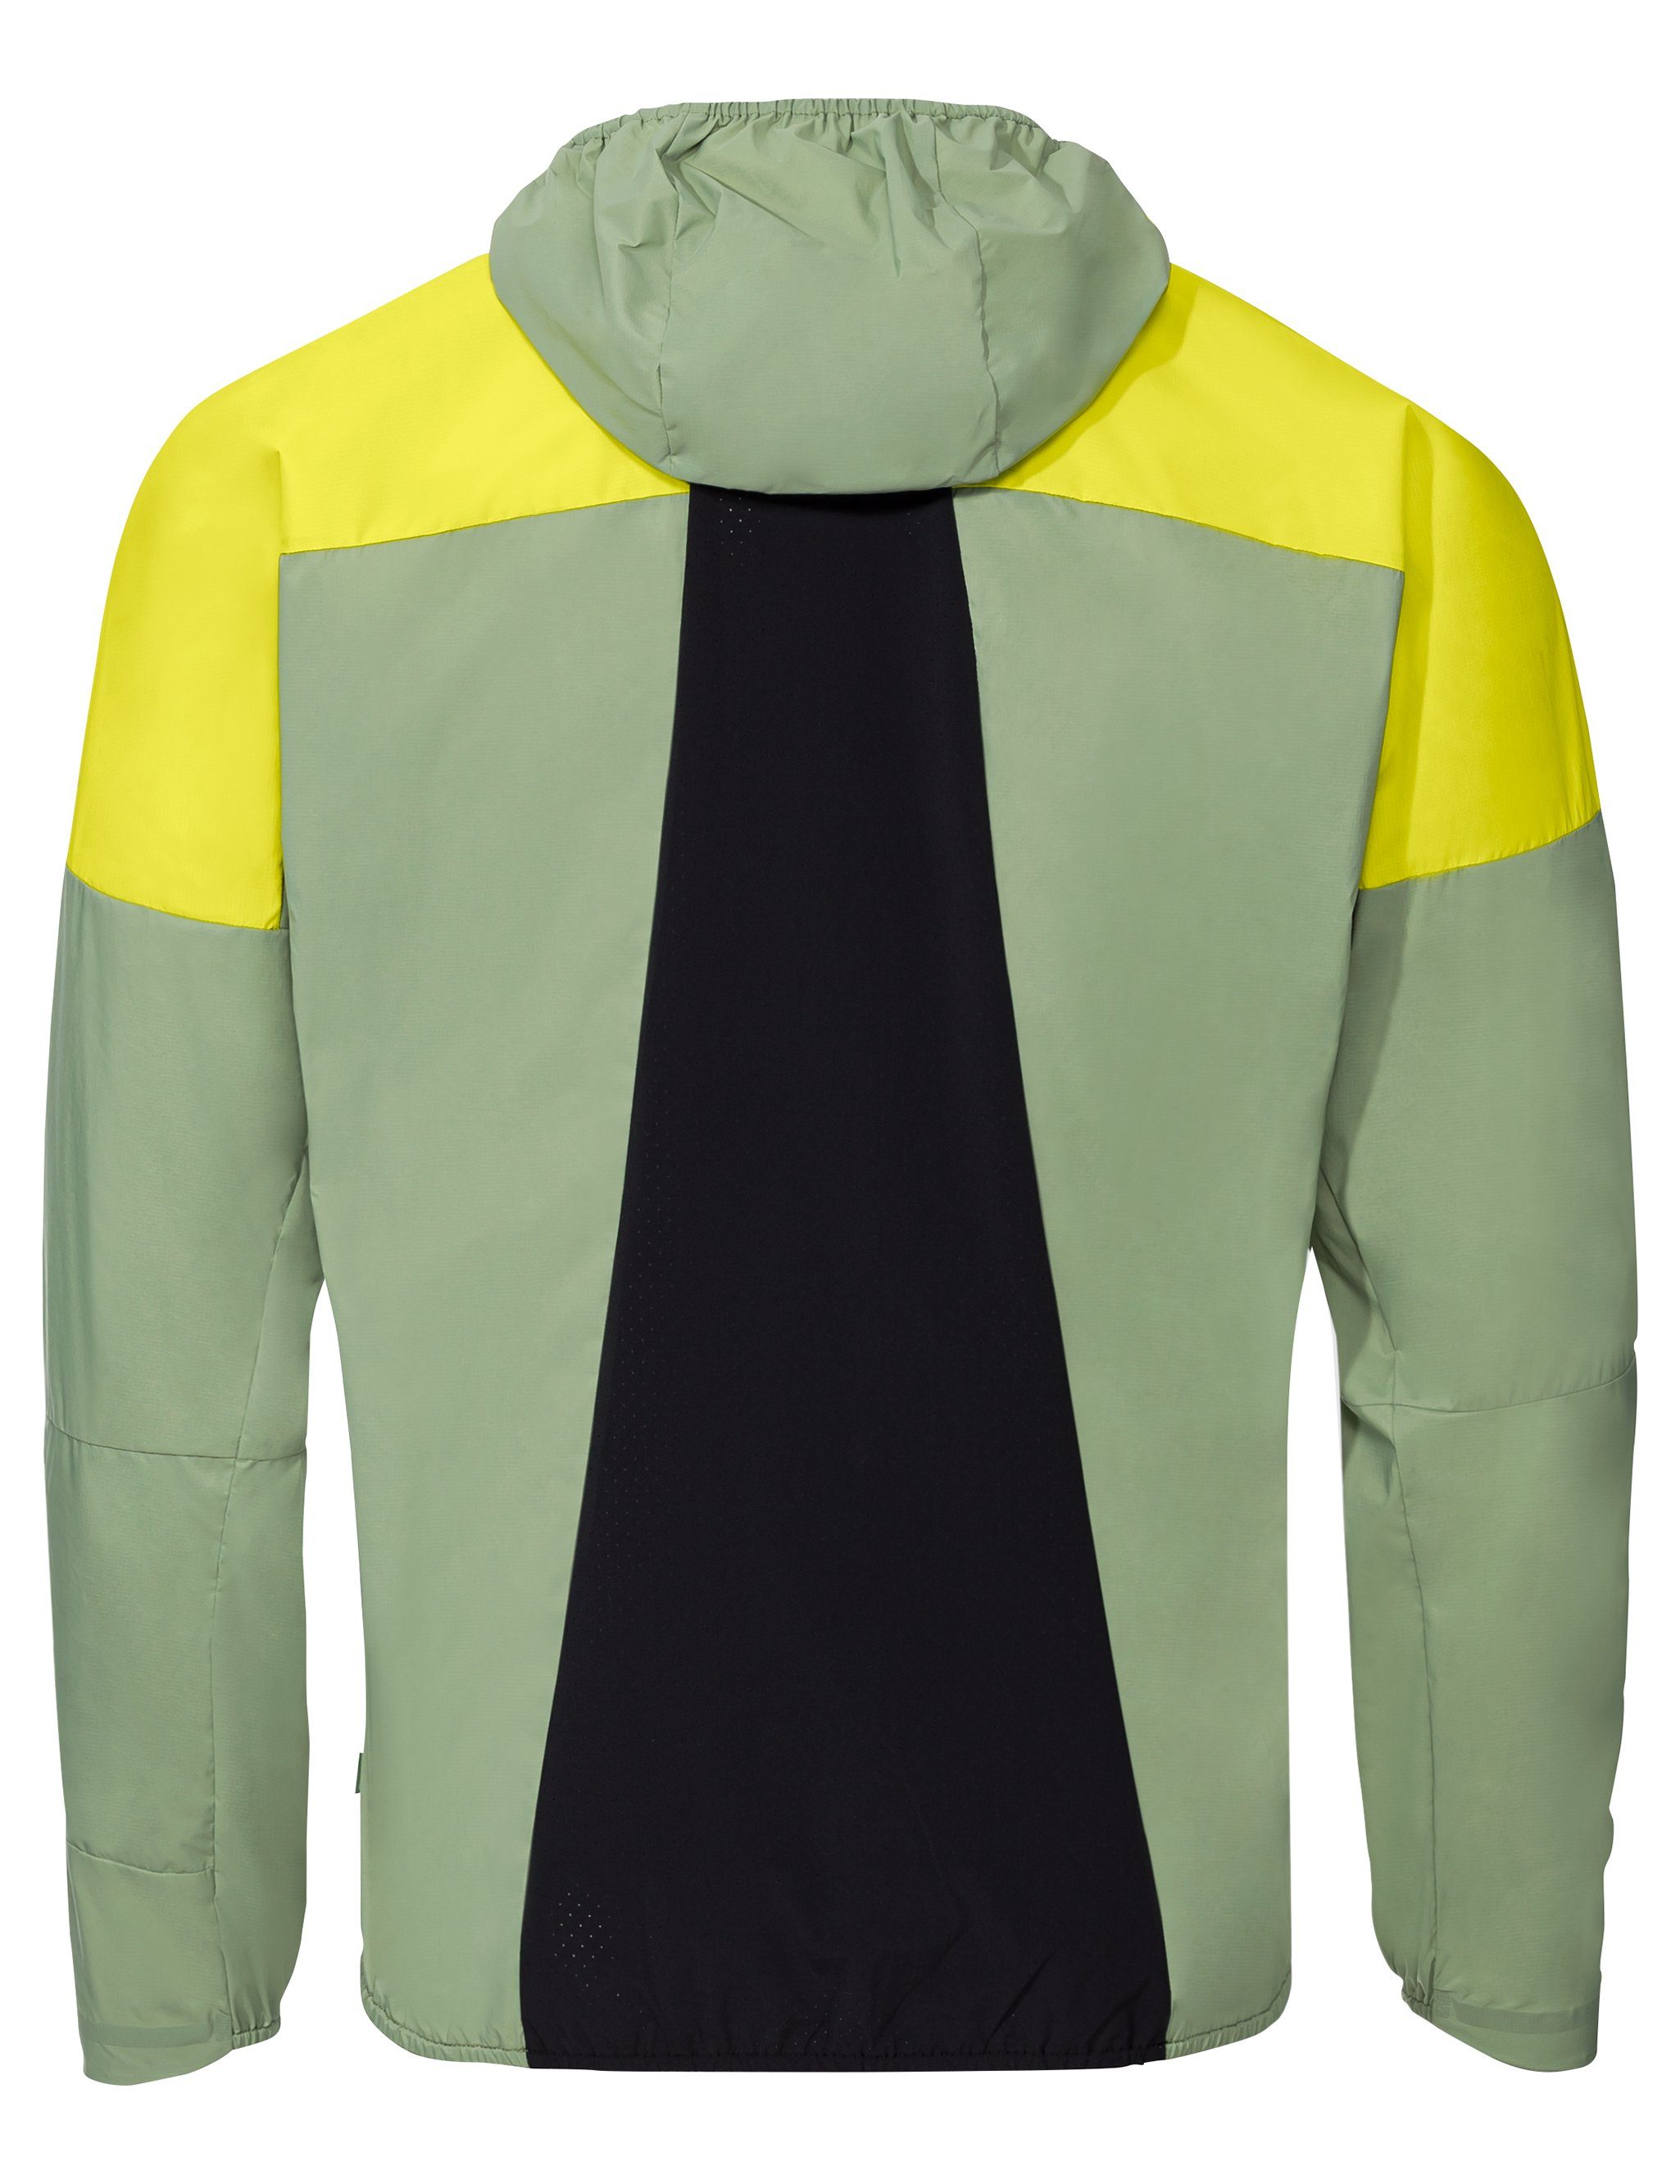 Crana VAUDE kompensiert green (1-St) Outdoorjacke Men's Jacket Klimaneutral Wind bright